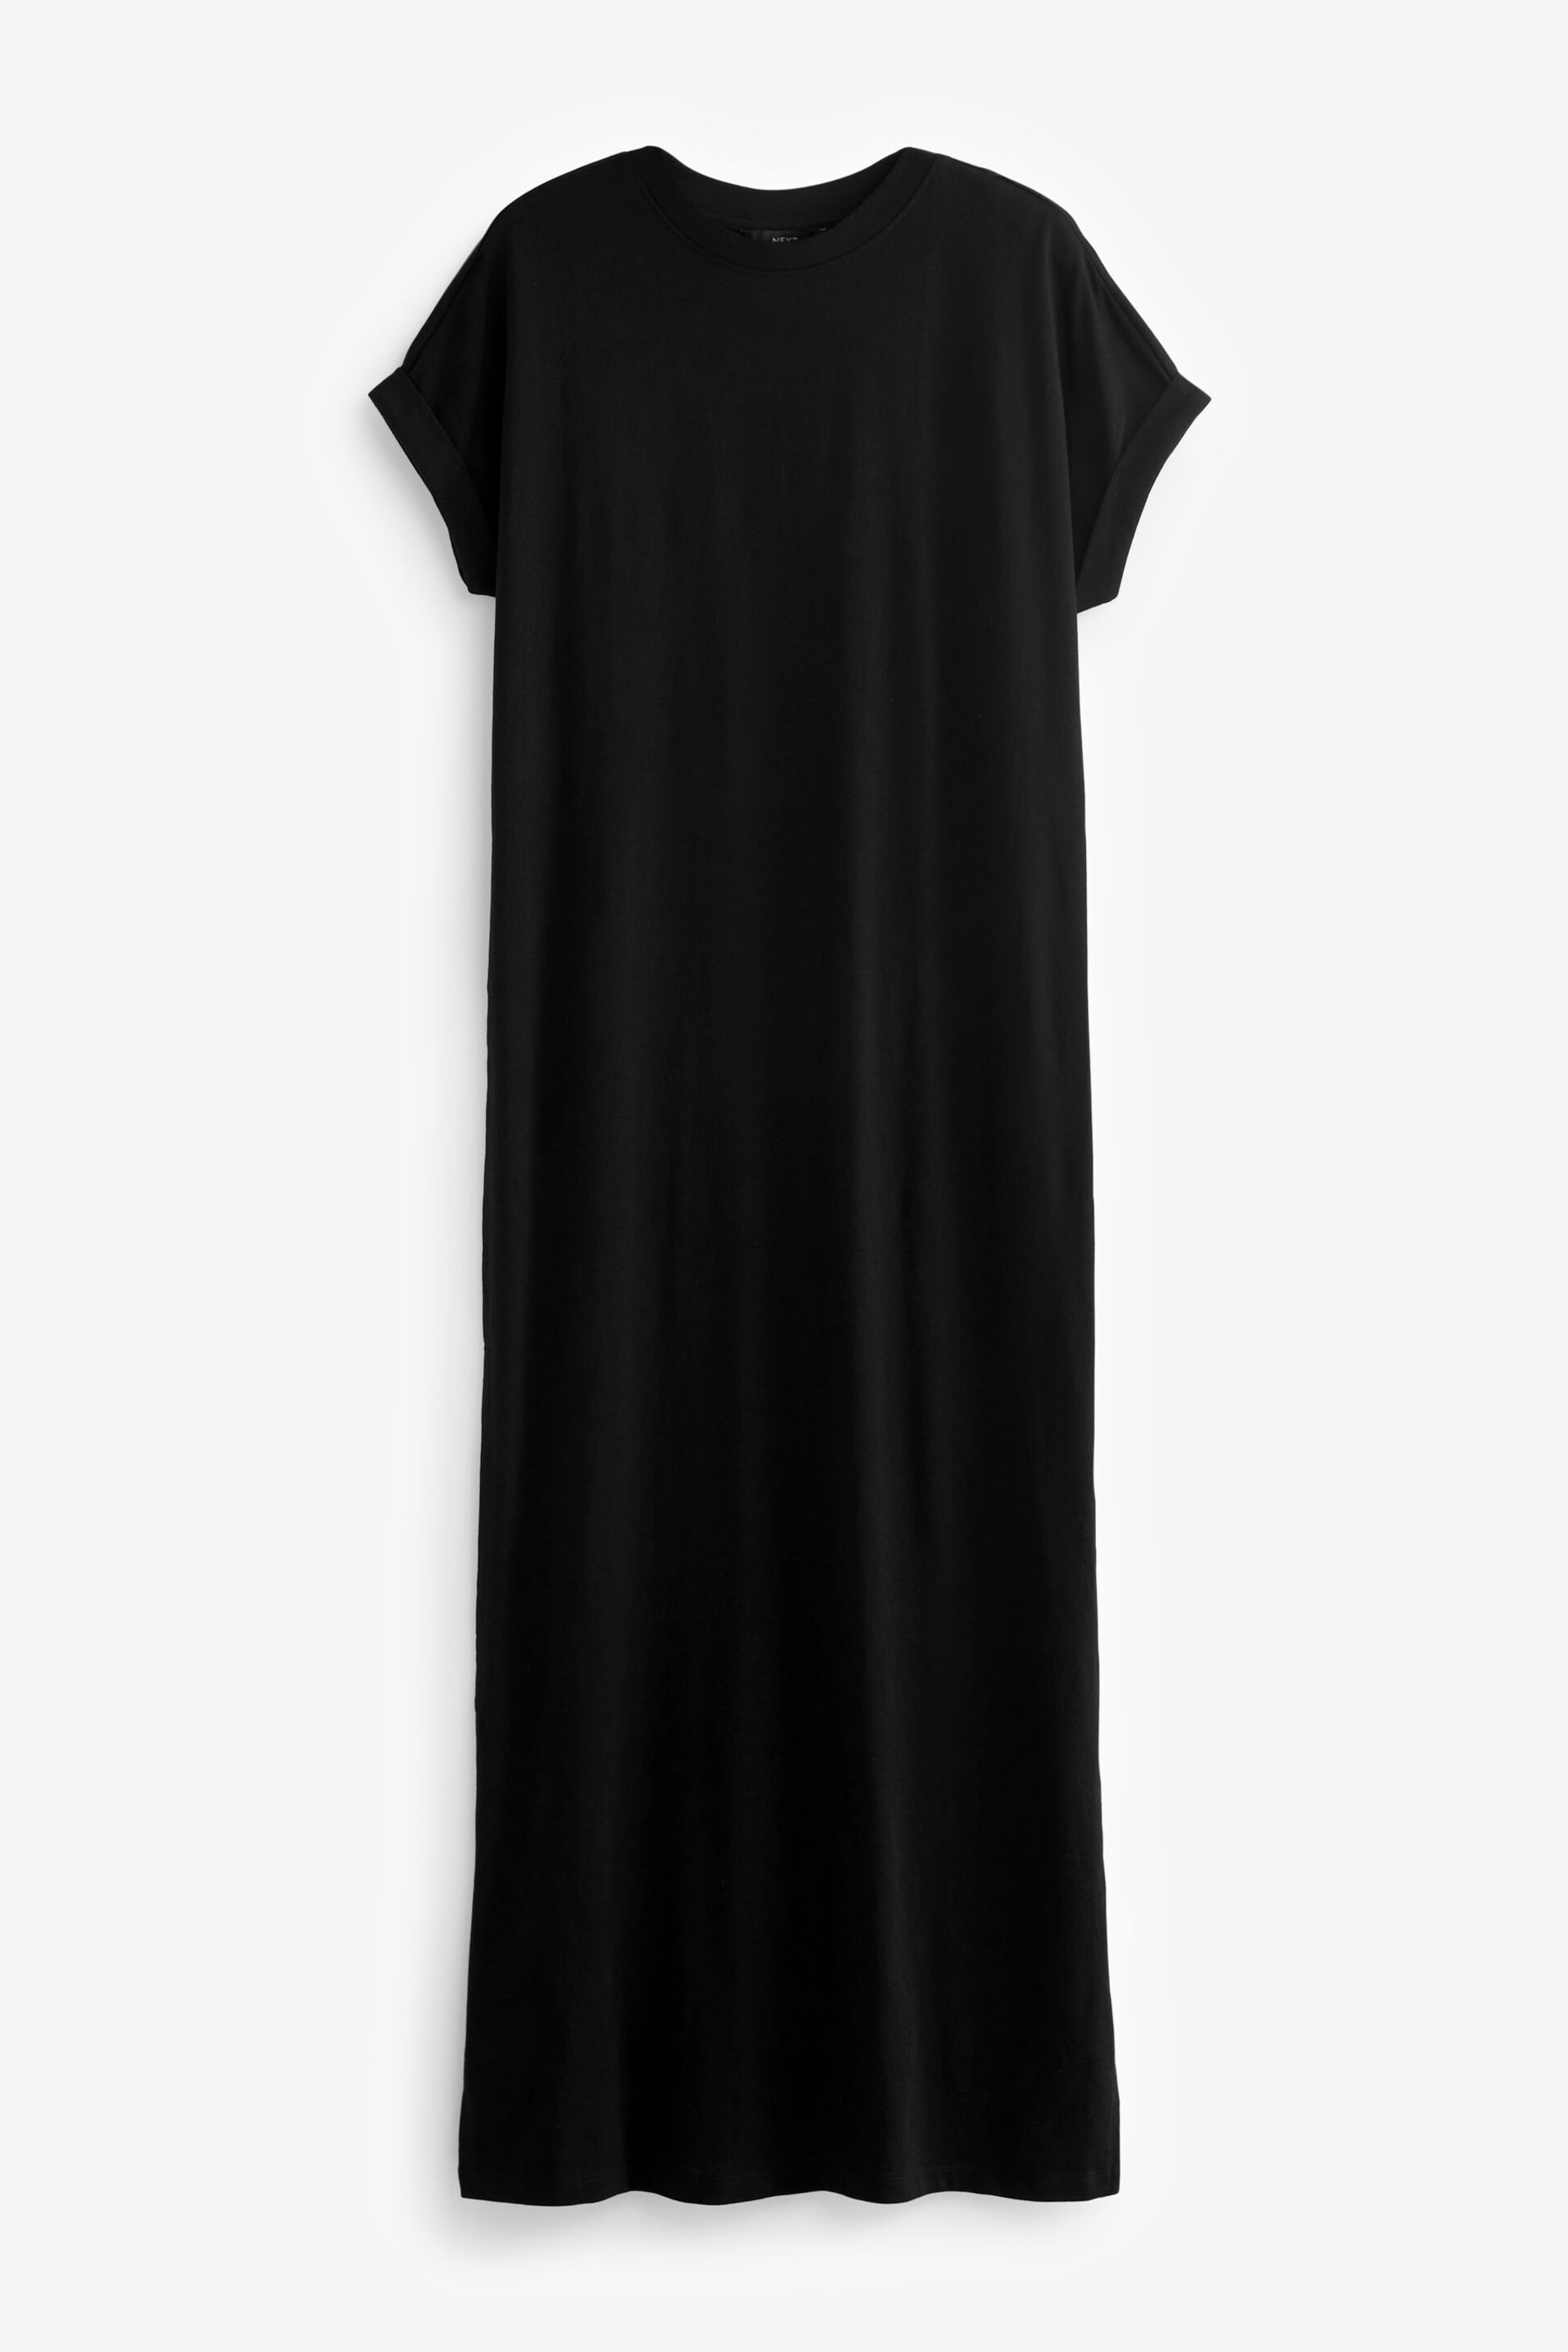 Black Short Sleeve Maxi T-Shirt Dress - Image 5 of 6